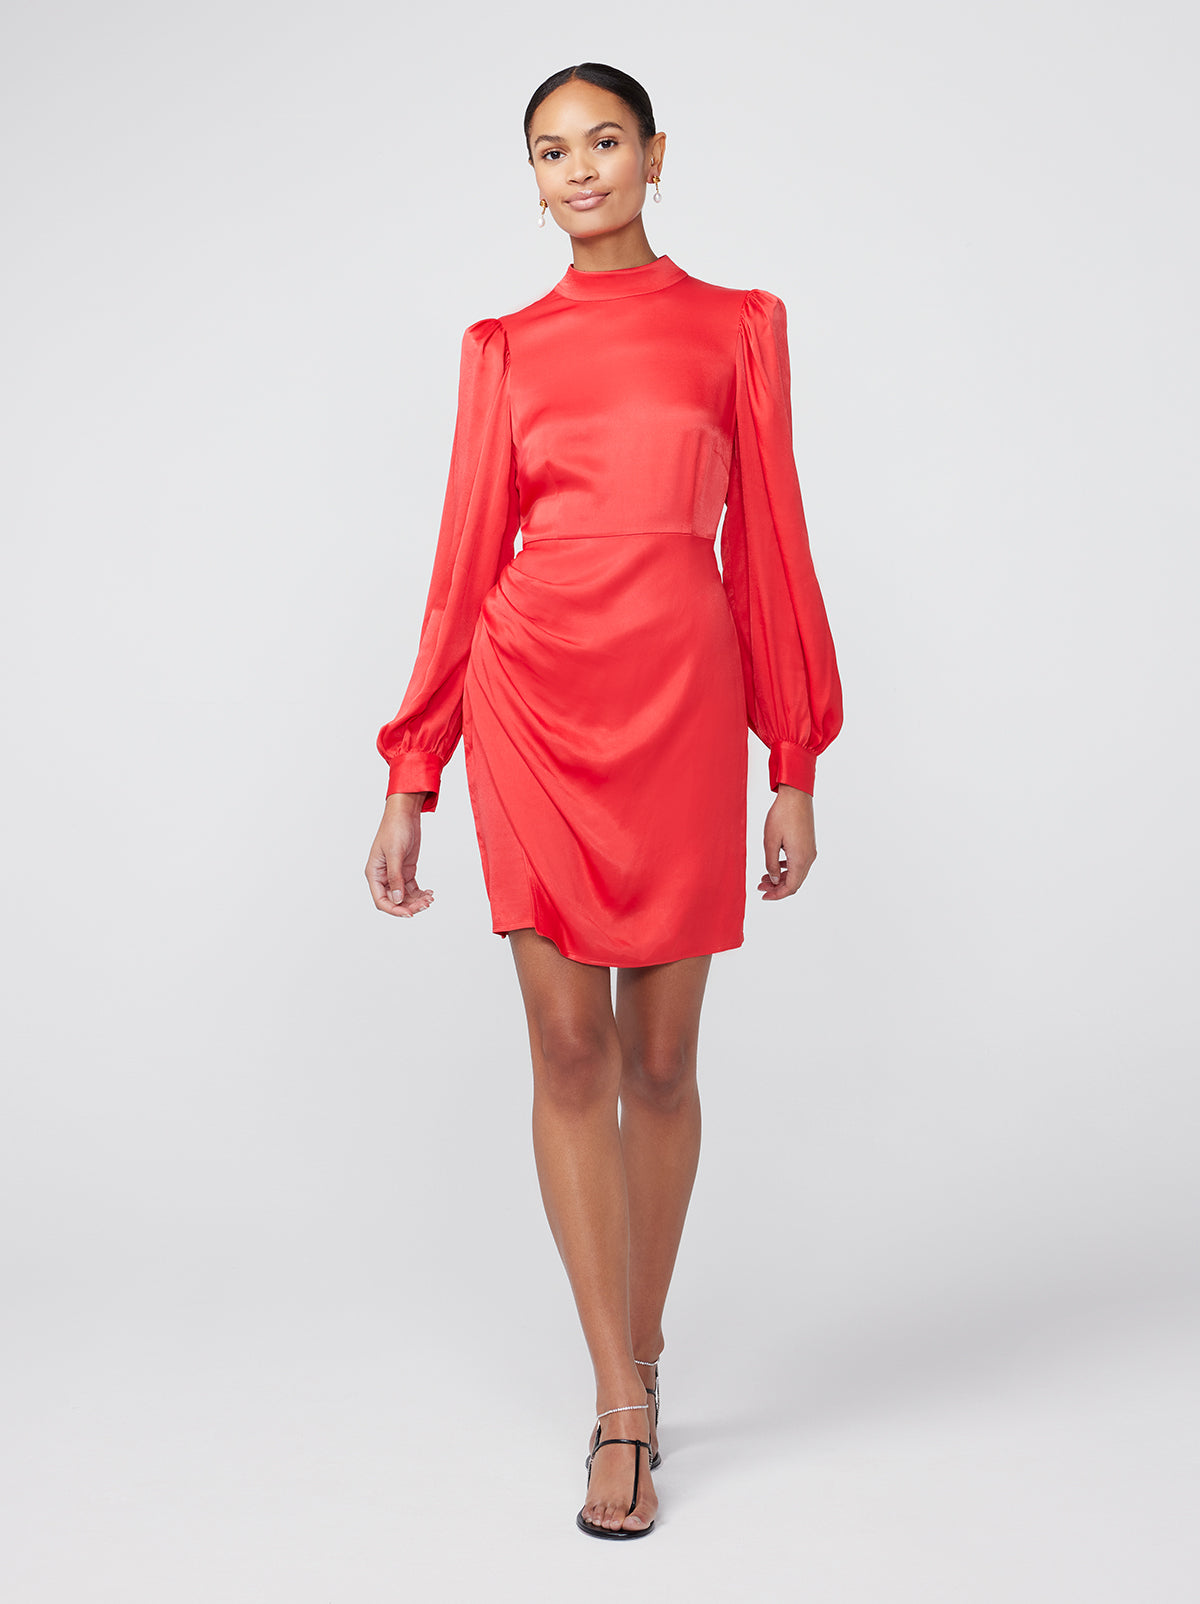 Jessa Red Satin Mini Dress By KITRI Studio